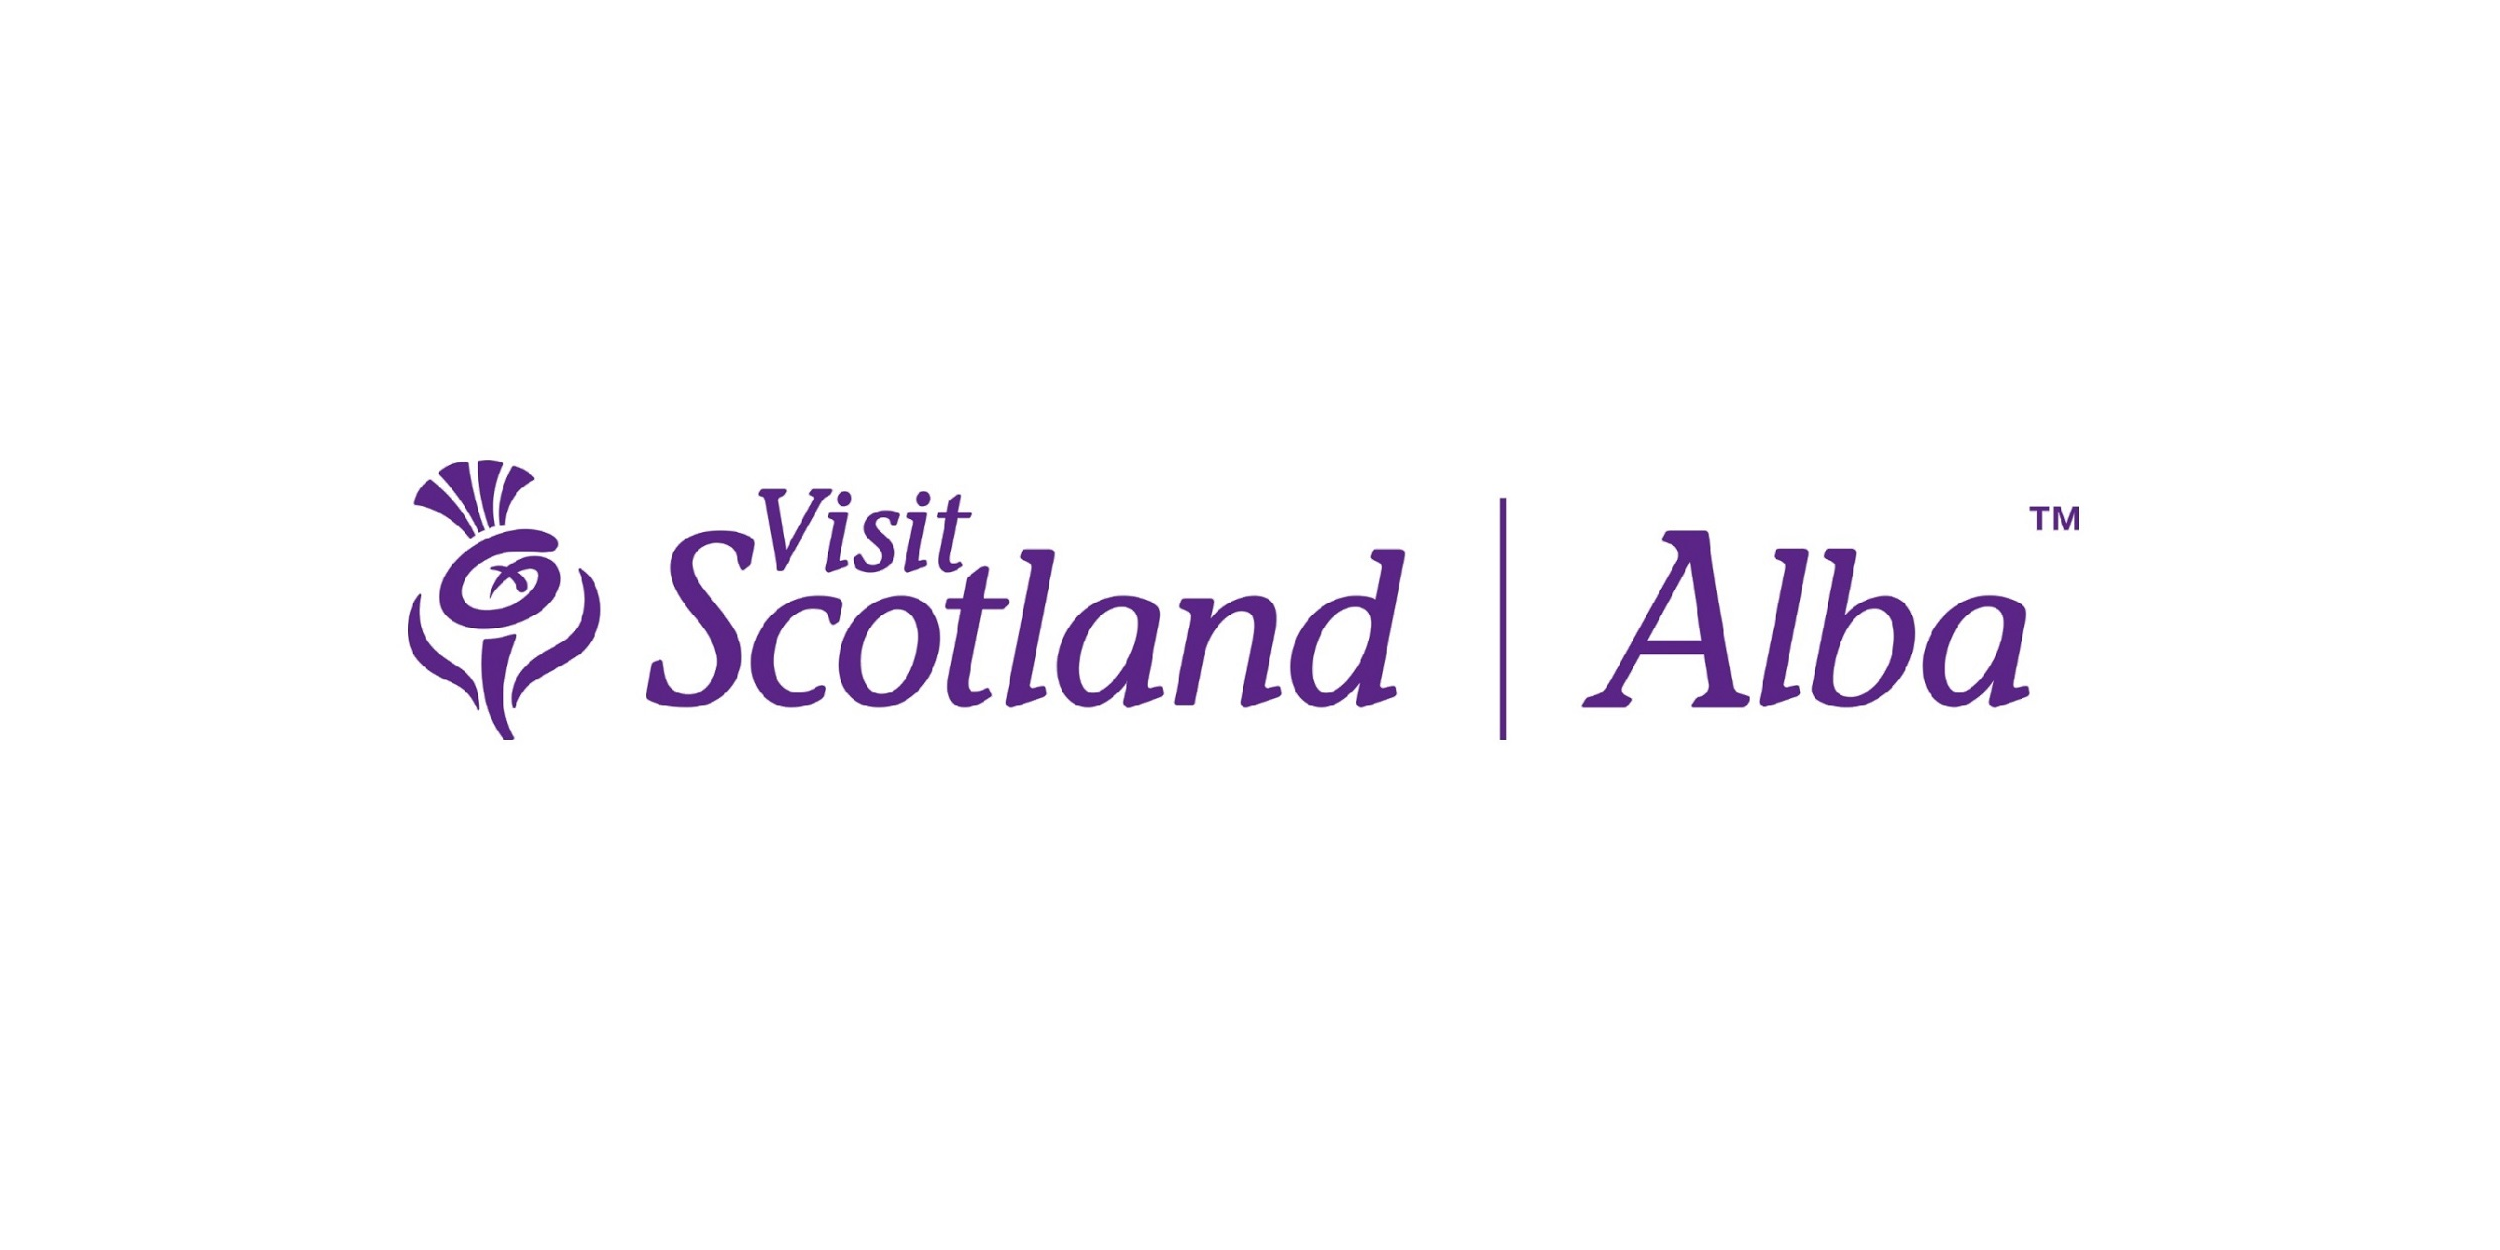 VisitScotland logo